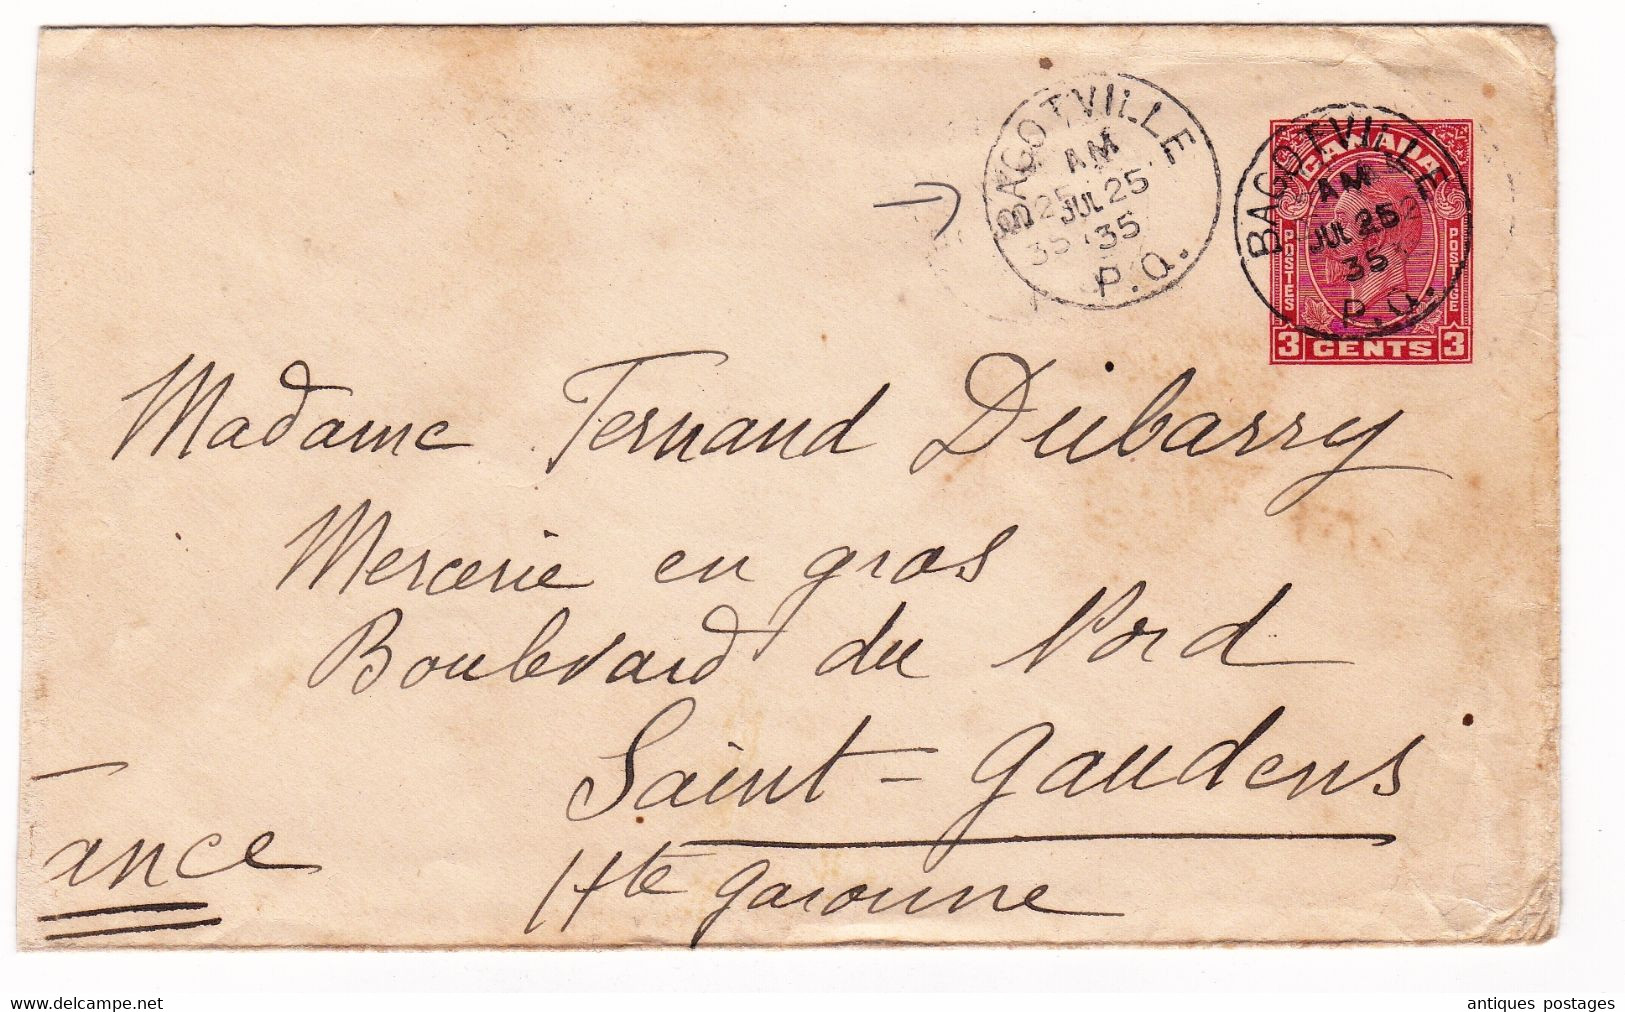 Canada Entier Postal 1935 Bagotville Sain Gaudens Haute Garonne Dubarry Mercerie - 1903-1954 Kings